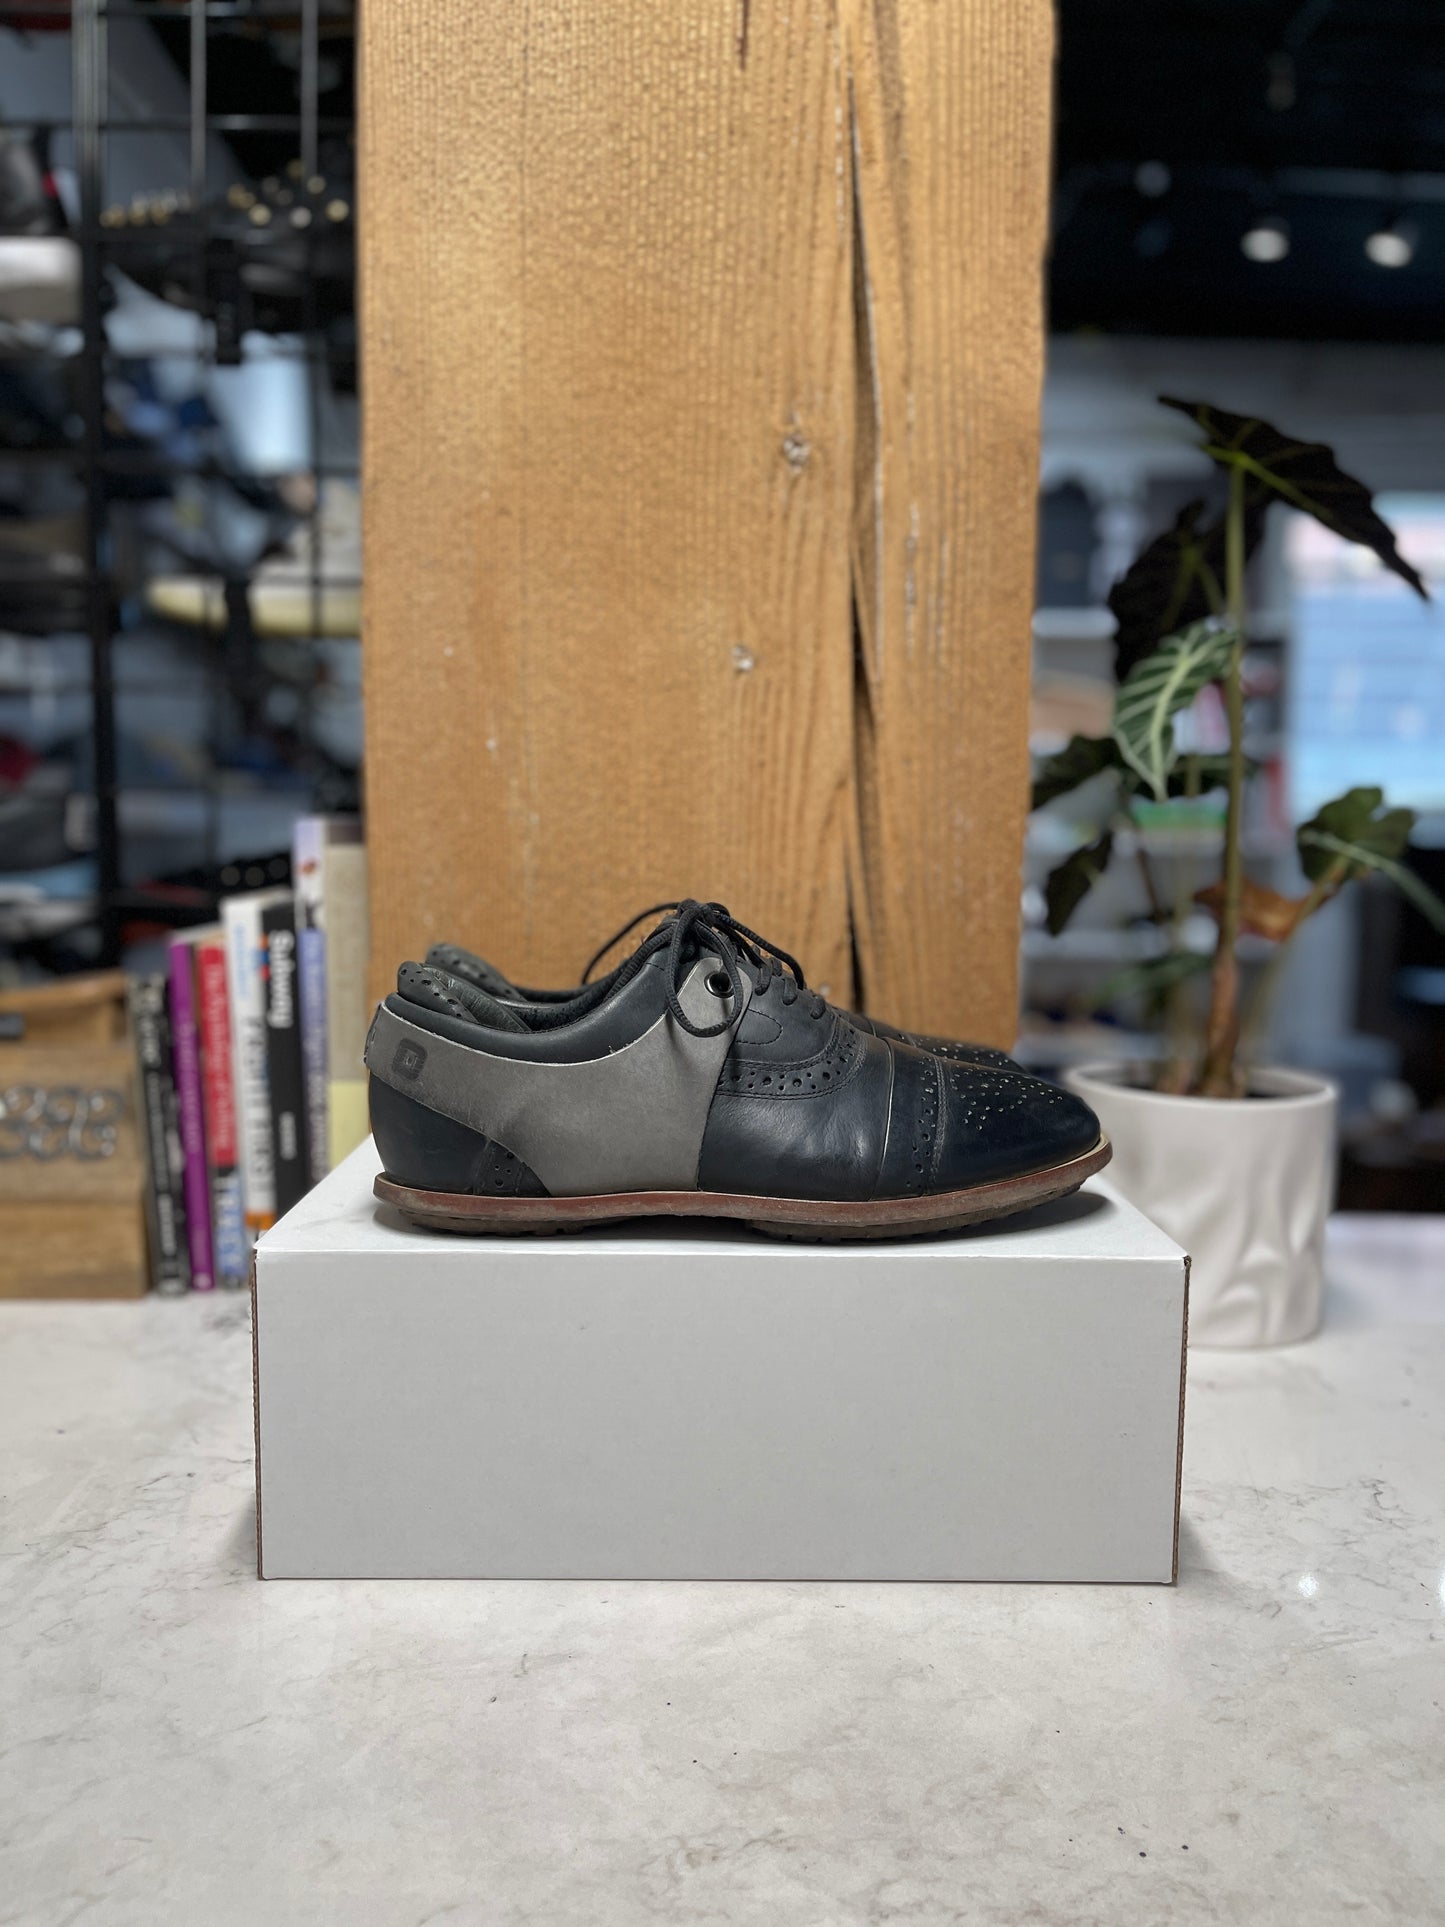 Tsubo Black/Grey Leather Dress Shoes (Size 9.5)